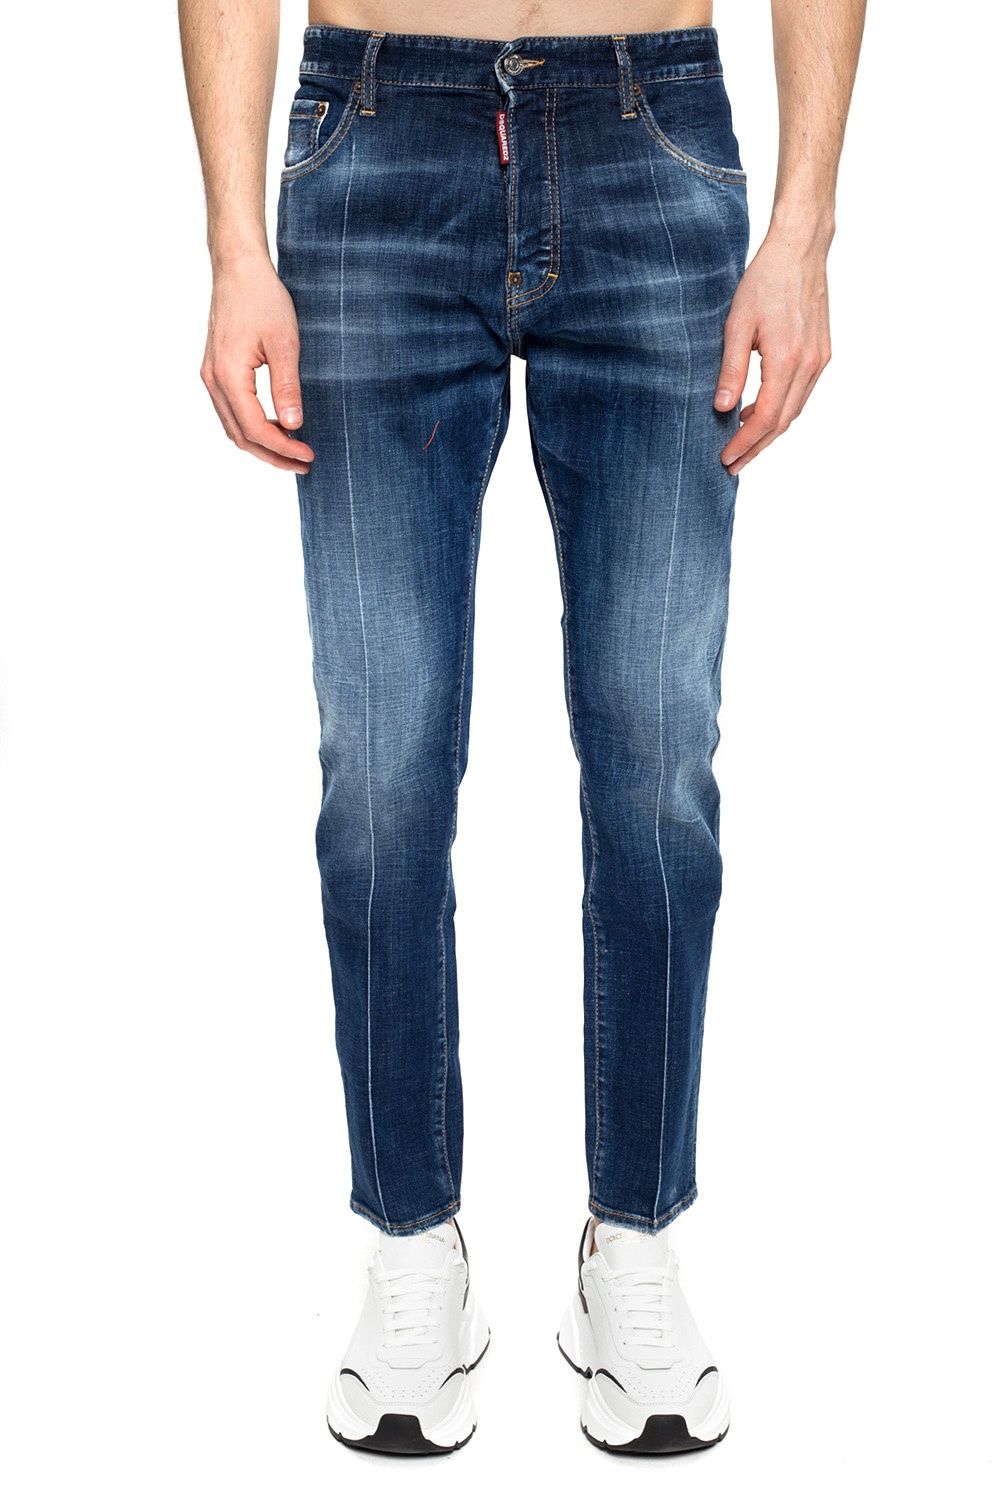 Dsquared2 ‘Sexy Mercury Jean’ jeans | Men's Clothing | Vitkac